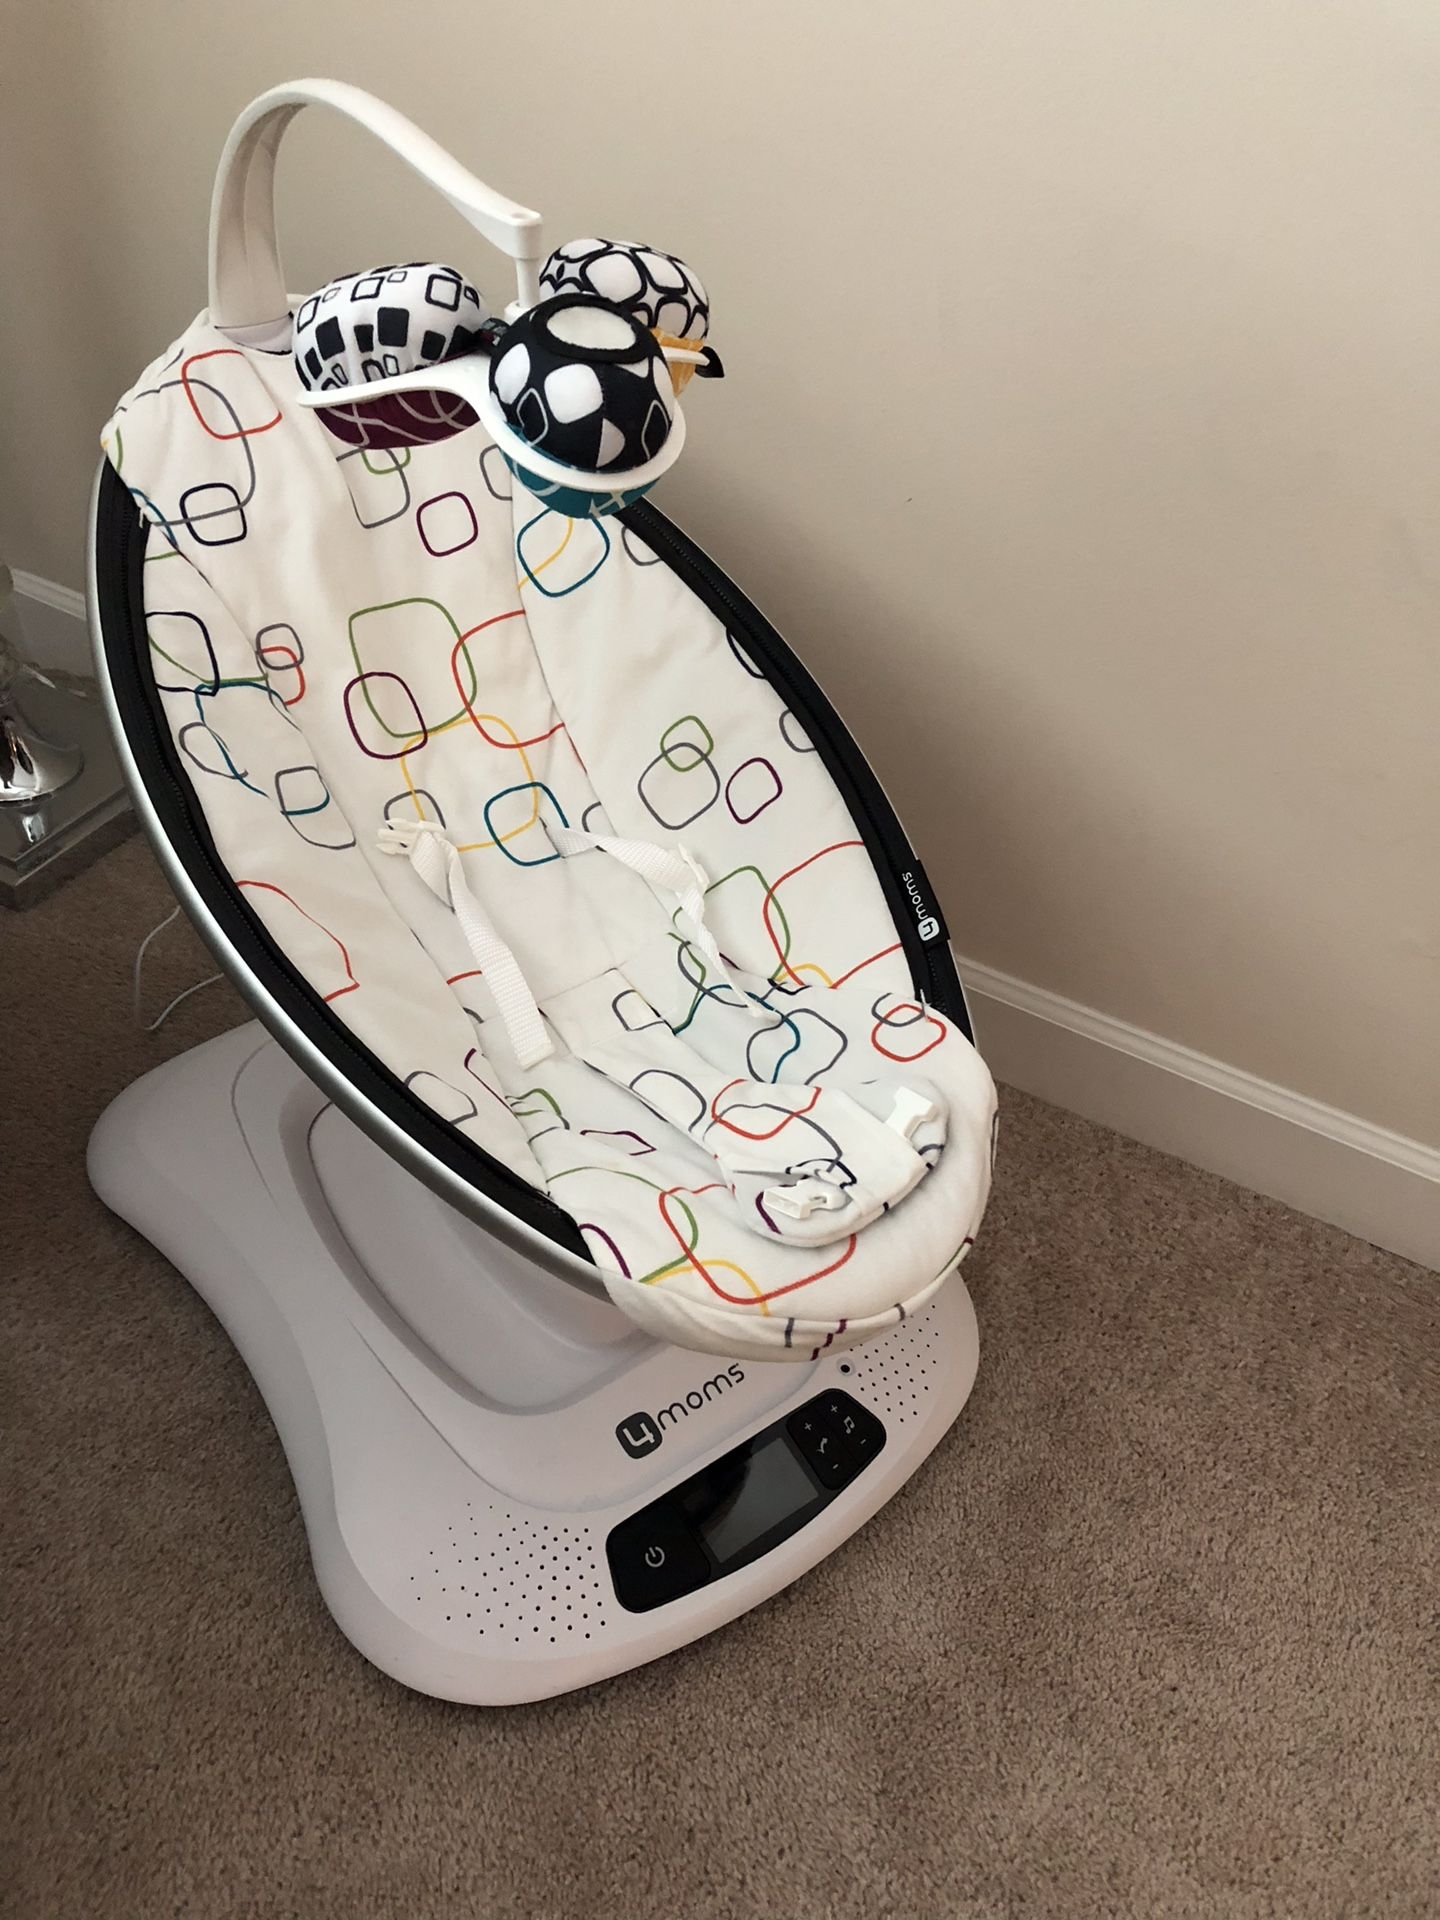 4moms mamaRoo (latest) infant seat Bluetooth-Enabled